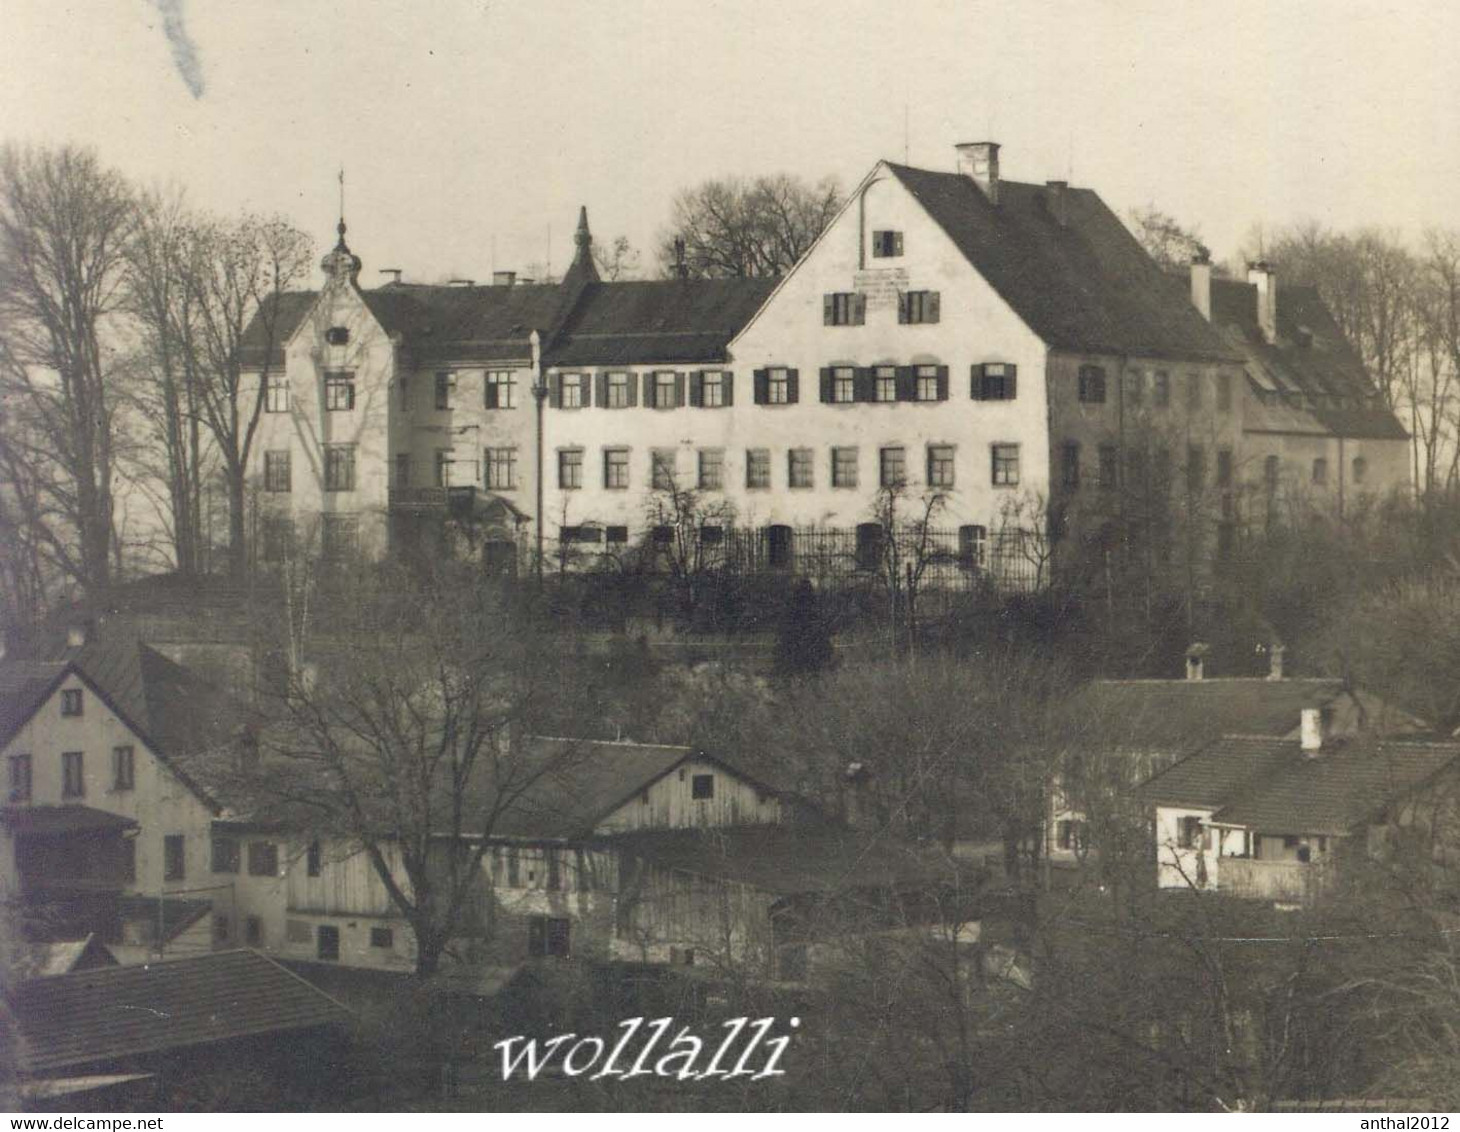 Rarität Moorbad Aibling Wohnhäuser Gasthaus Kreuz Keller 17.3.1930 Verlag Triem - Bad Aibling